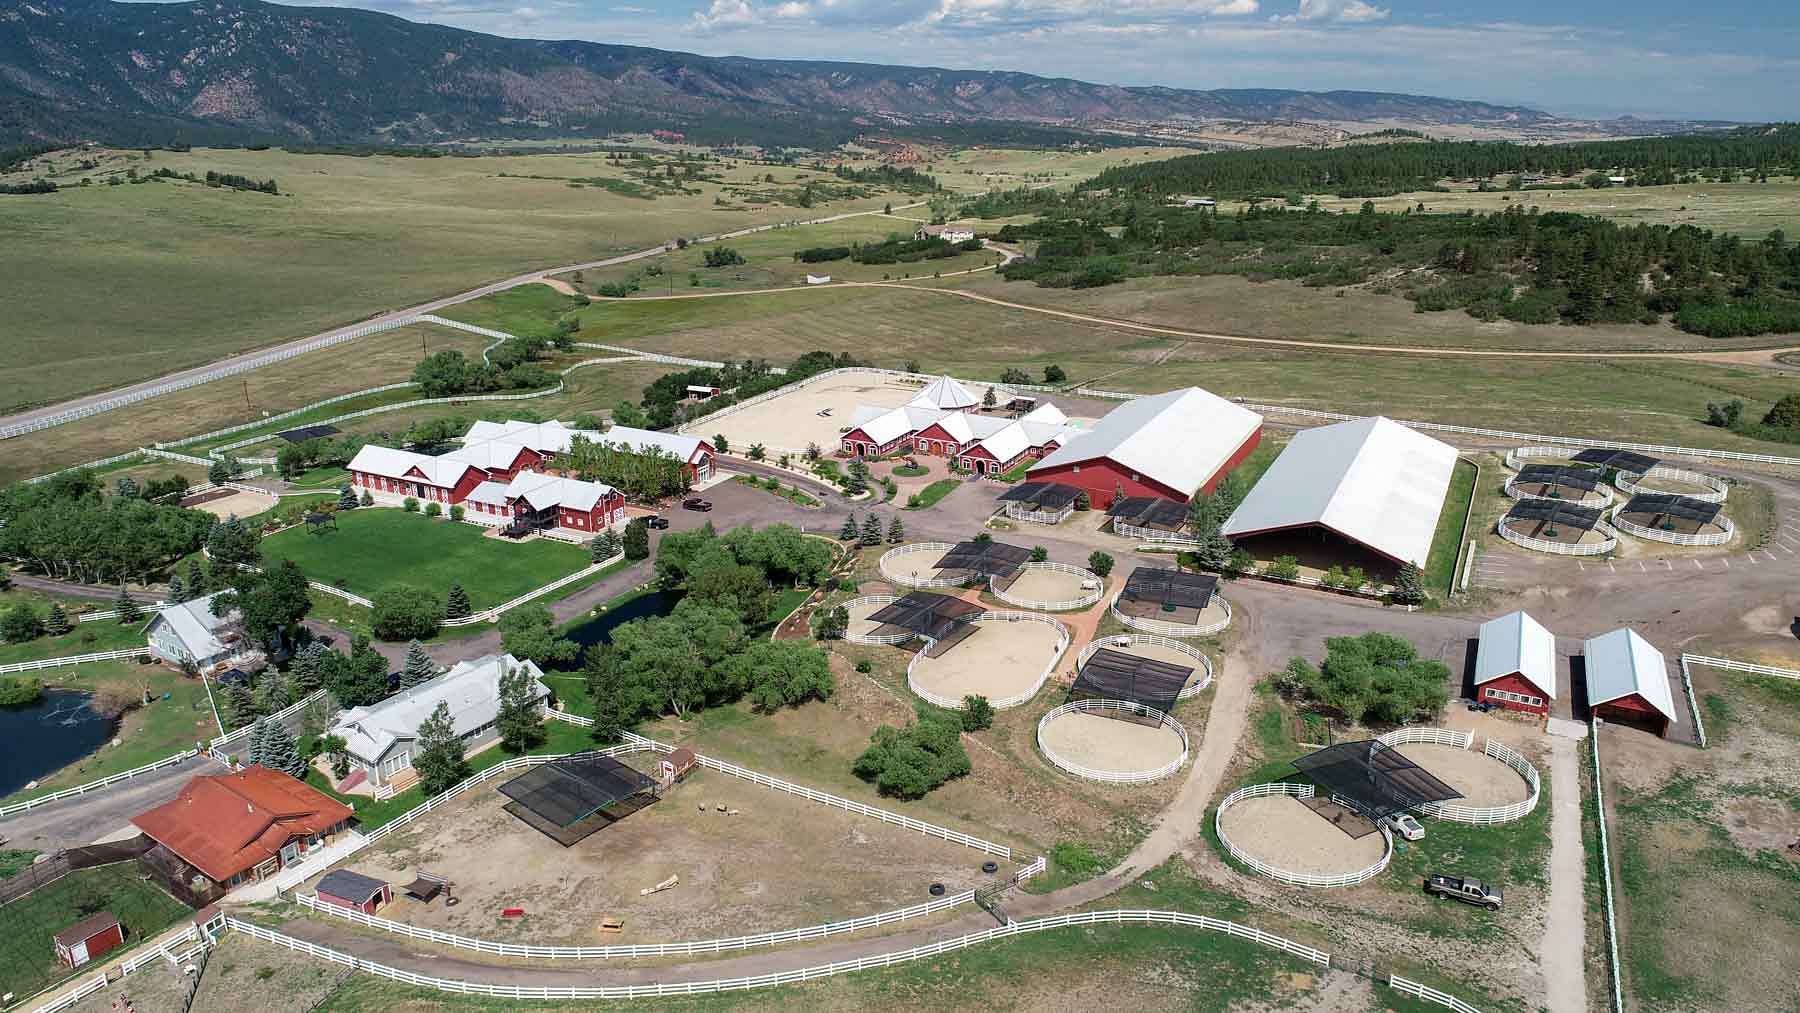 111 Acres of Improved Land for Sale in Larkspur, Colorado